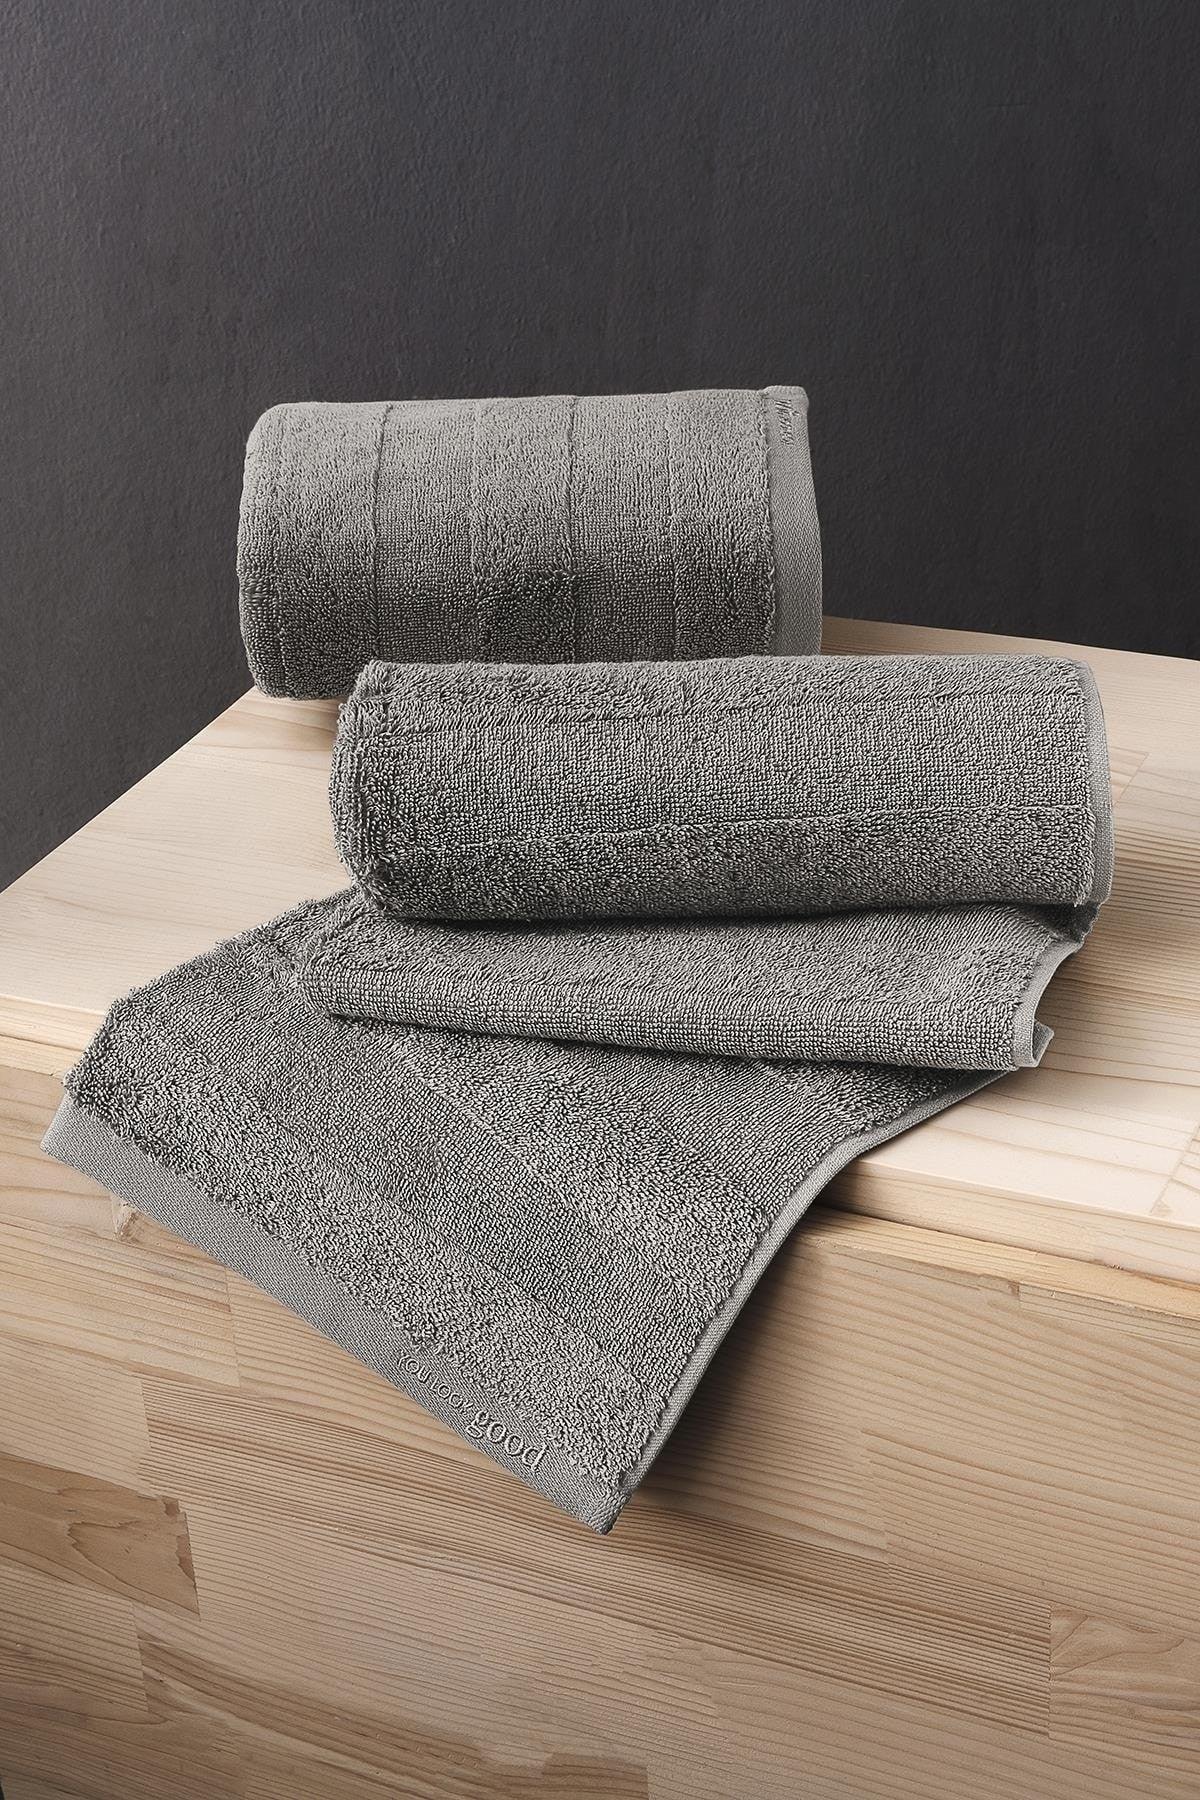 Mons Set 404 - New Trend, 50x90 - 70x140cm. 2pcs. Premium Towel Set - Swordslife